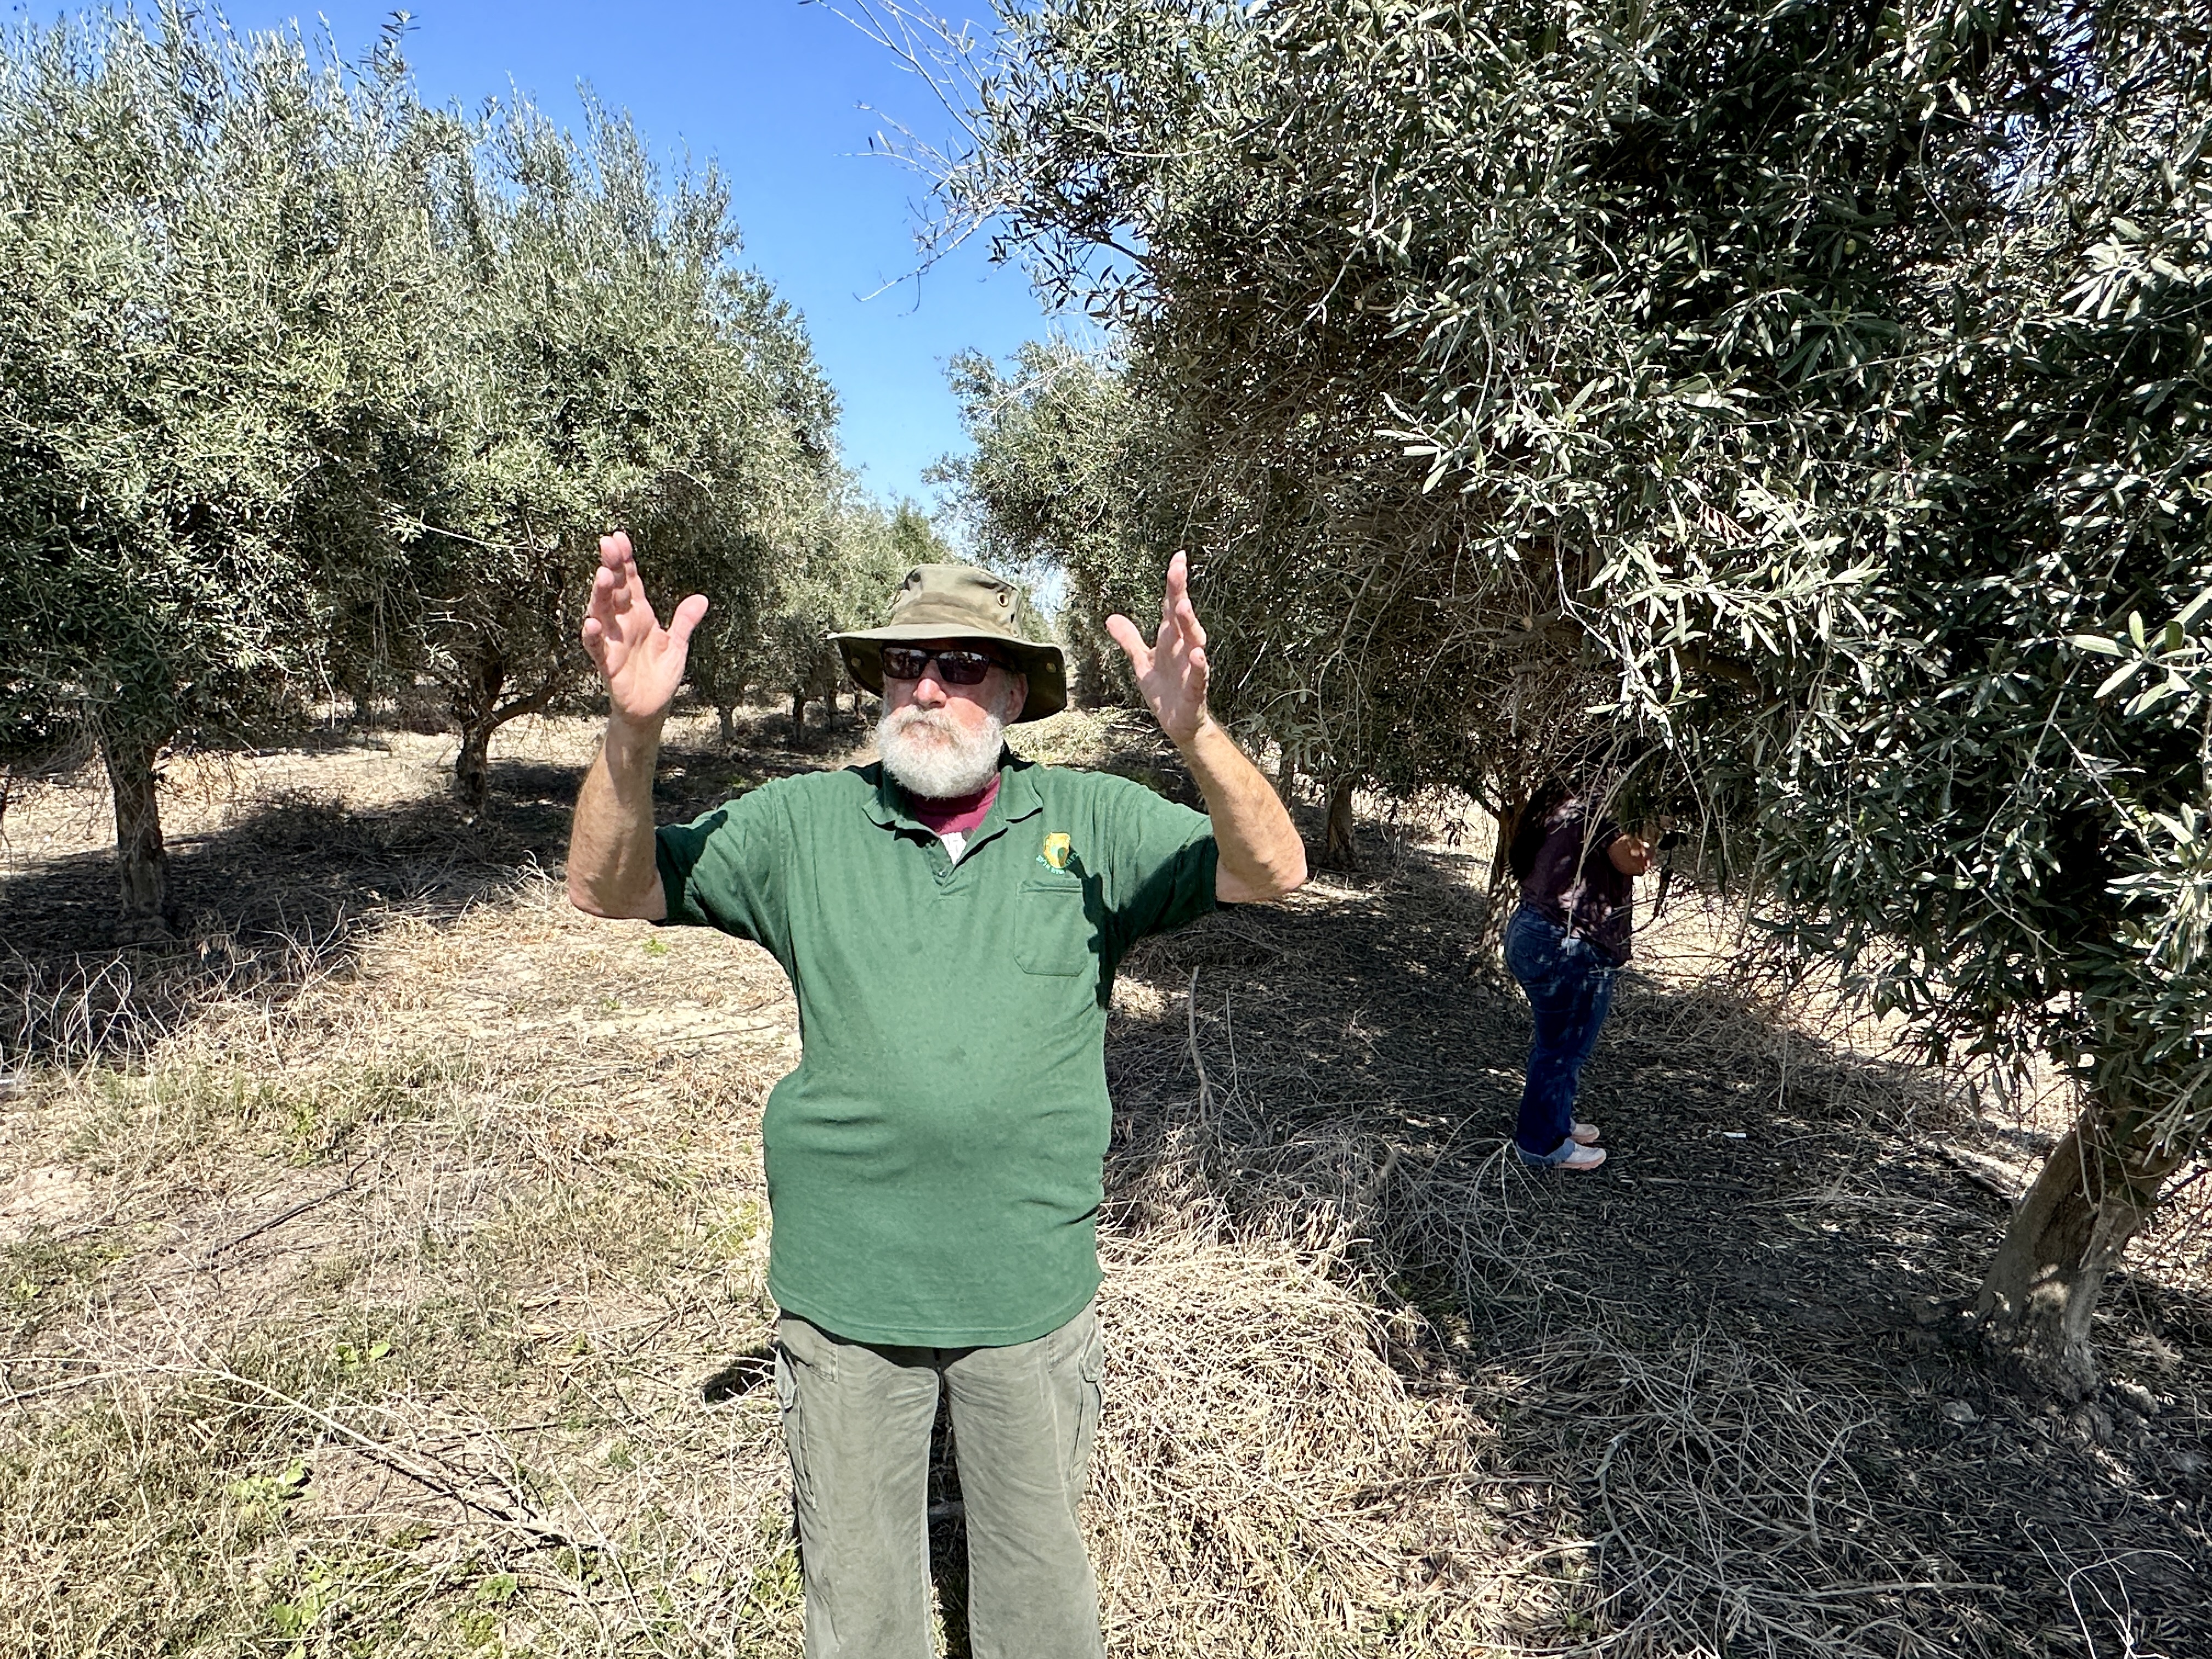 Oklahoma Ag Leadership Program Sees Diverse Farm Operations in Jordan River Valley of Israel